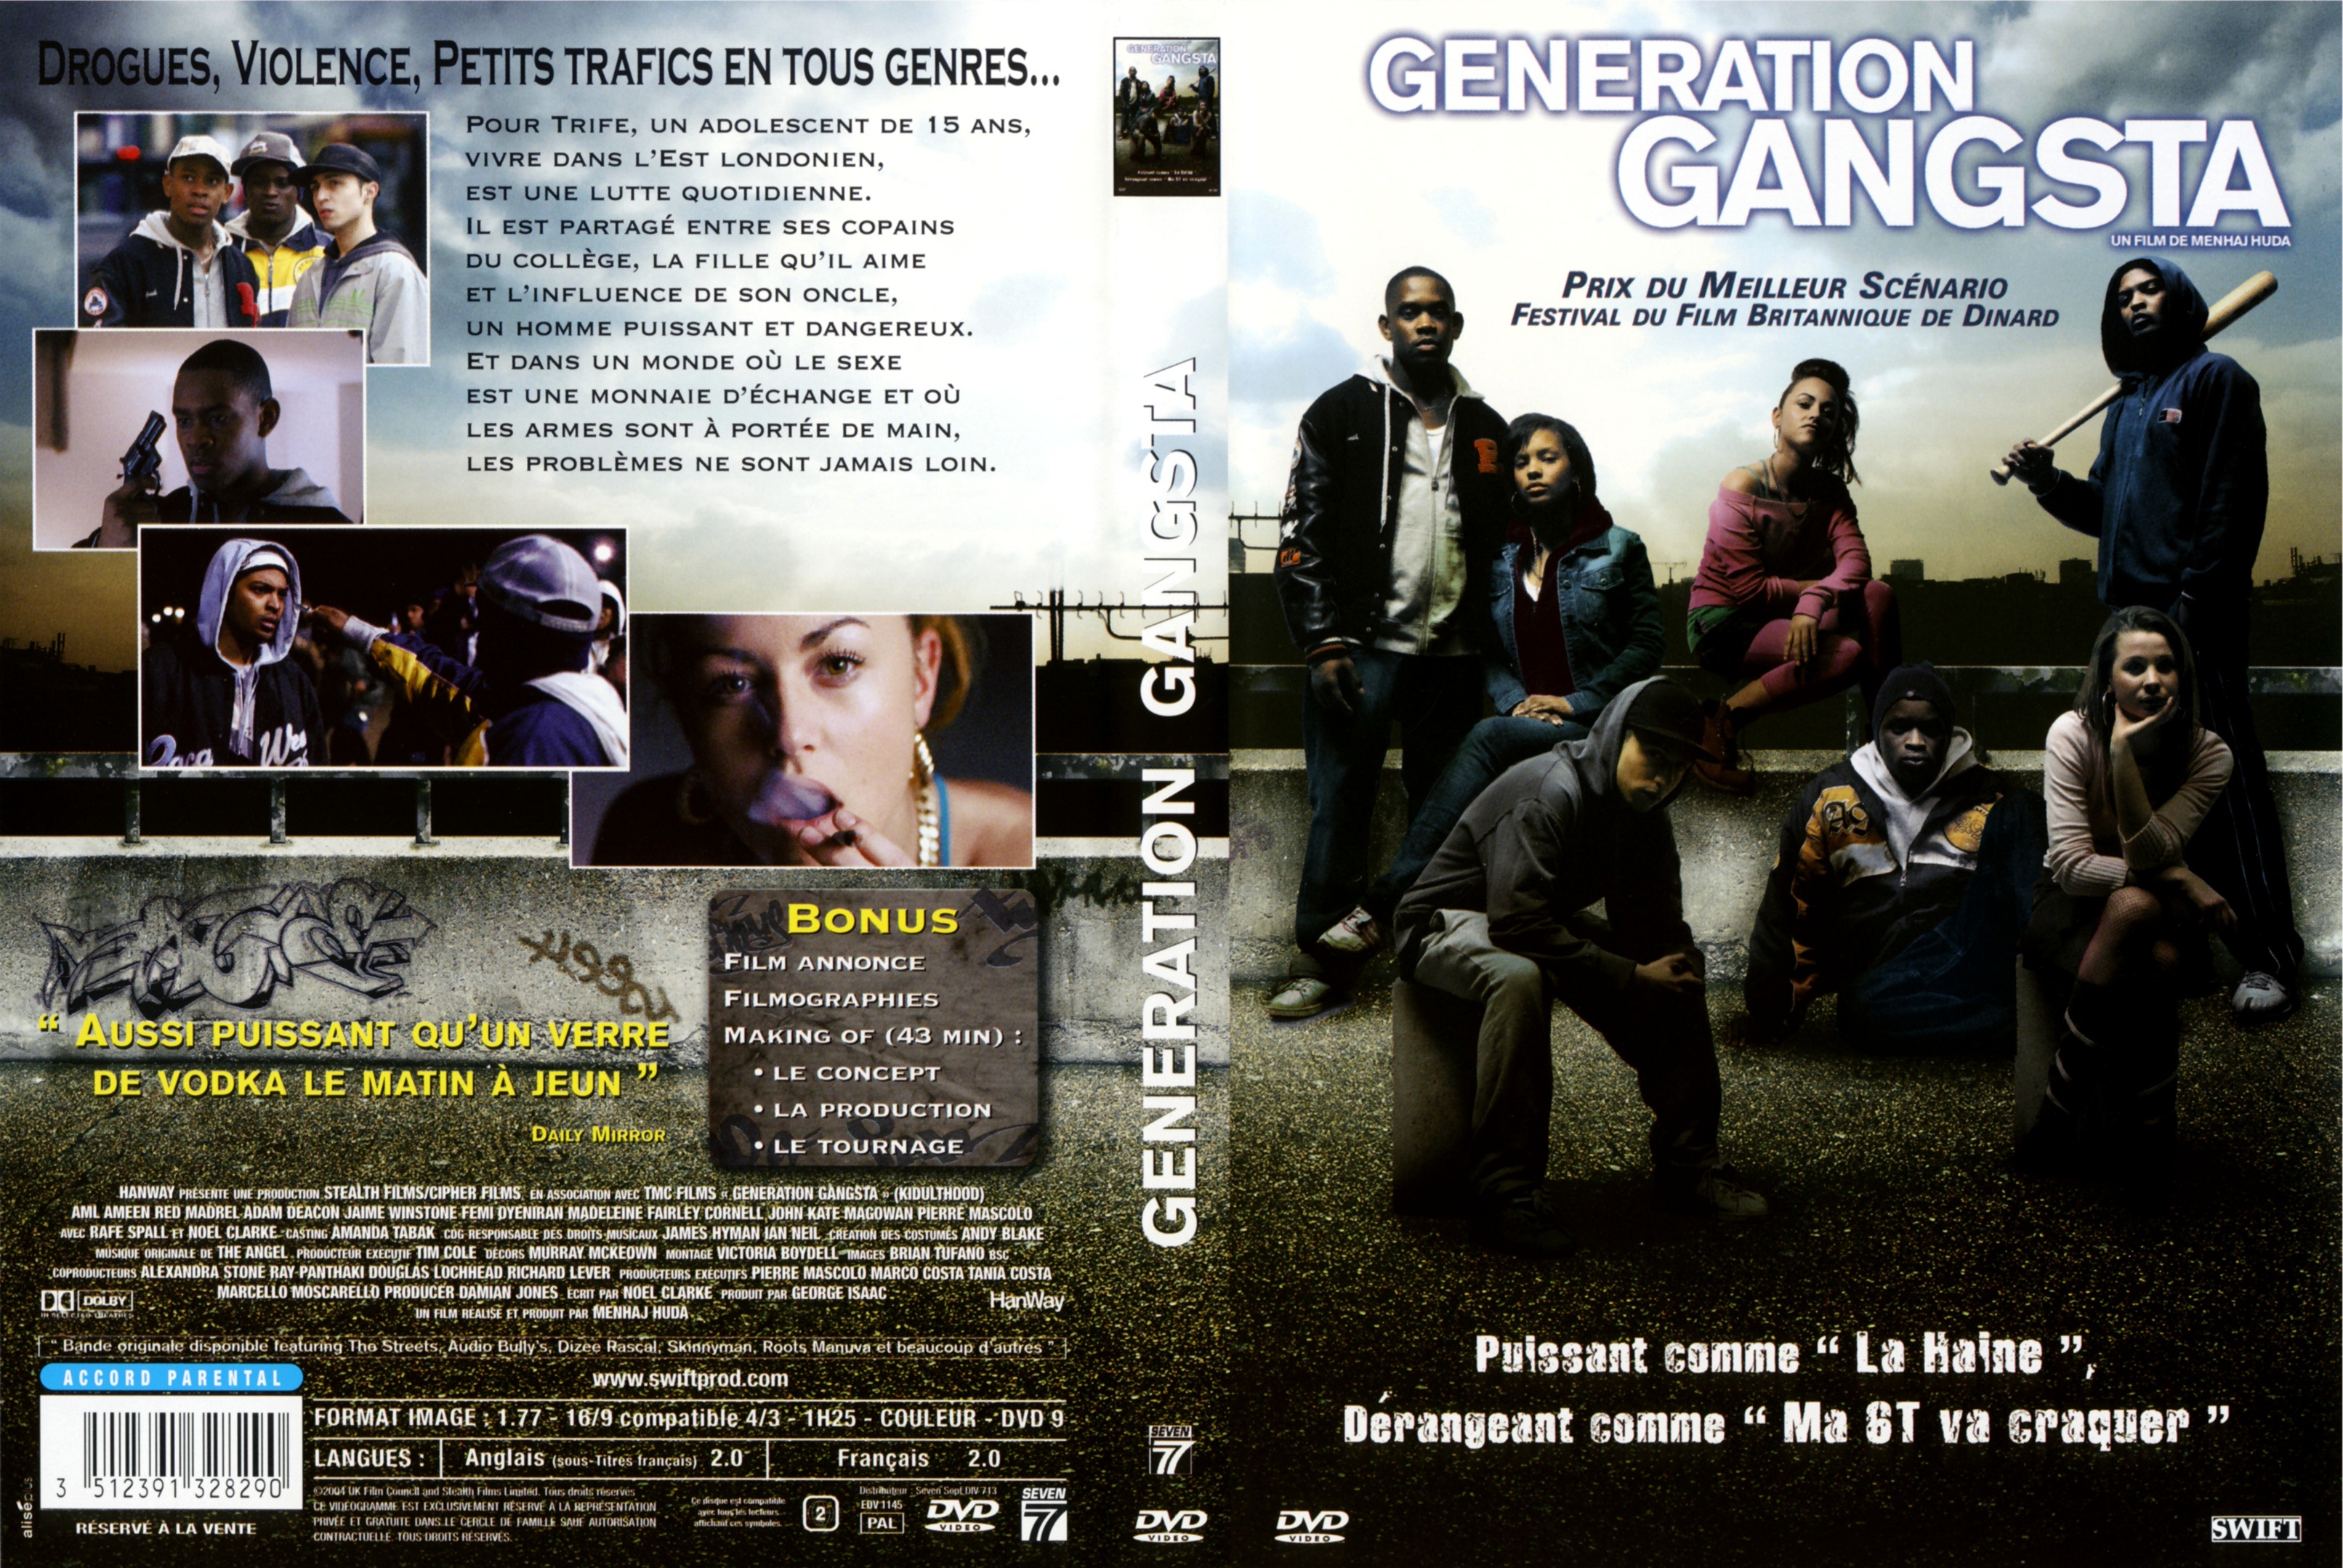 Jaquette DVD Generation gangsta v2